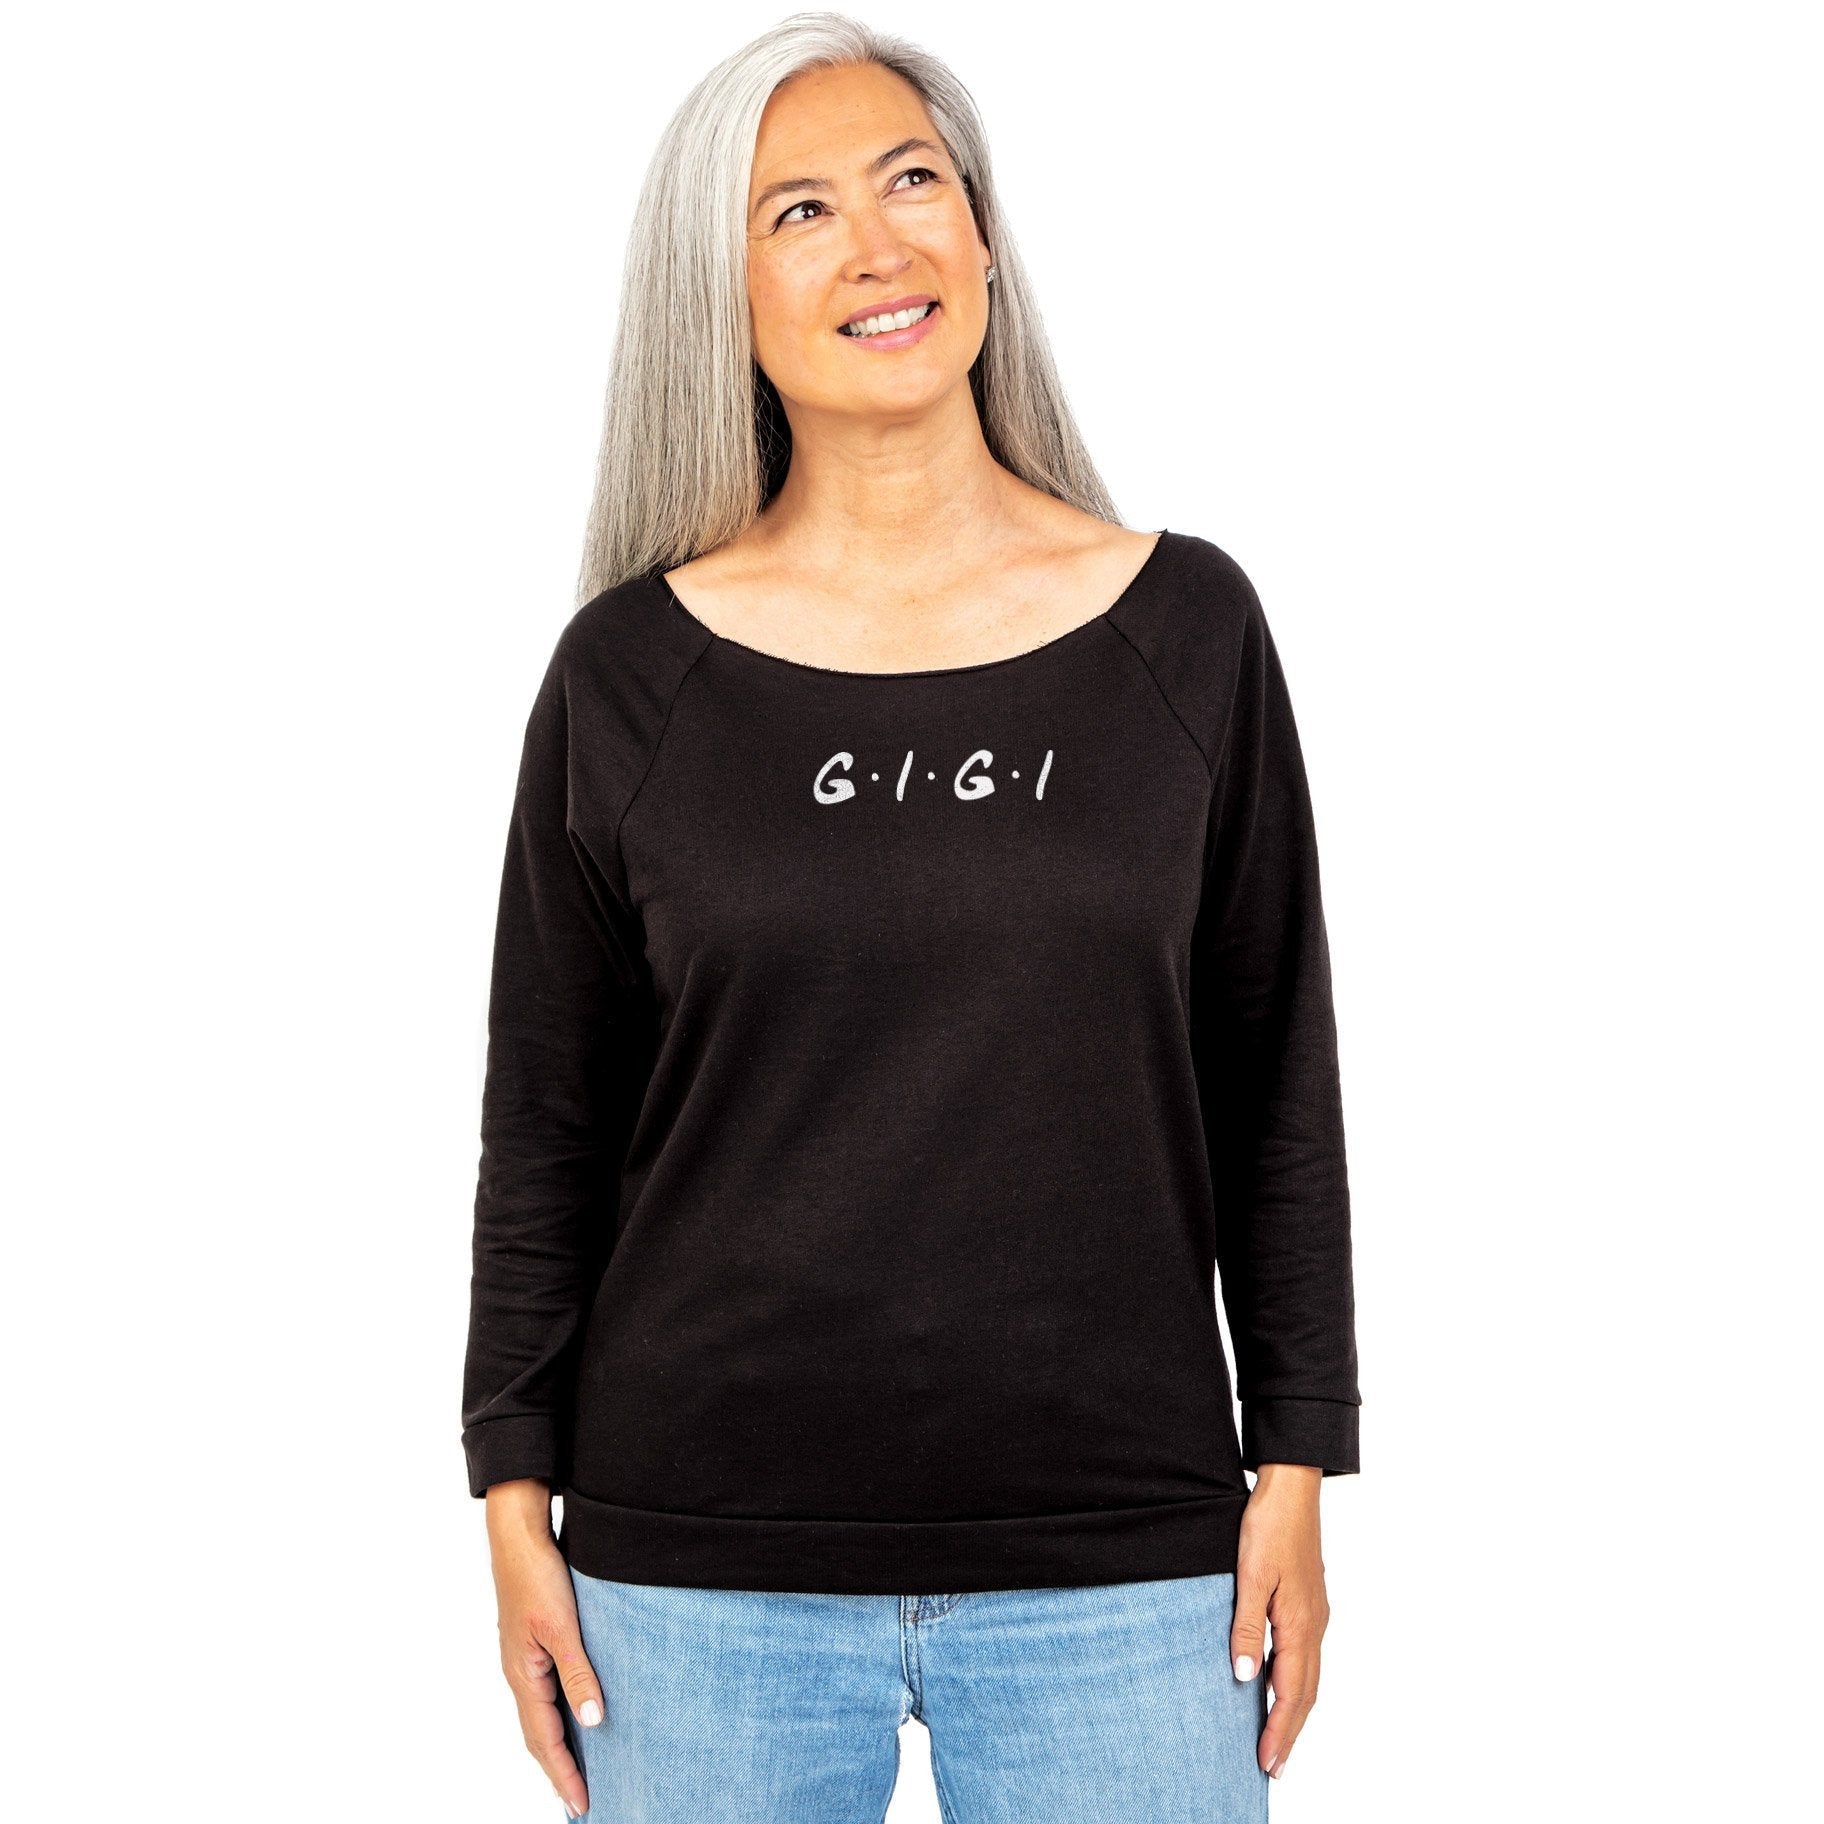 Gigi Friends Women's Graphic Printed Lightweight Slouchy 3/4 Sleeves Sweatshirt Black Model